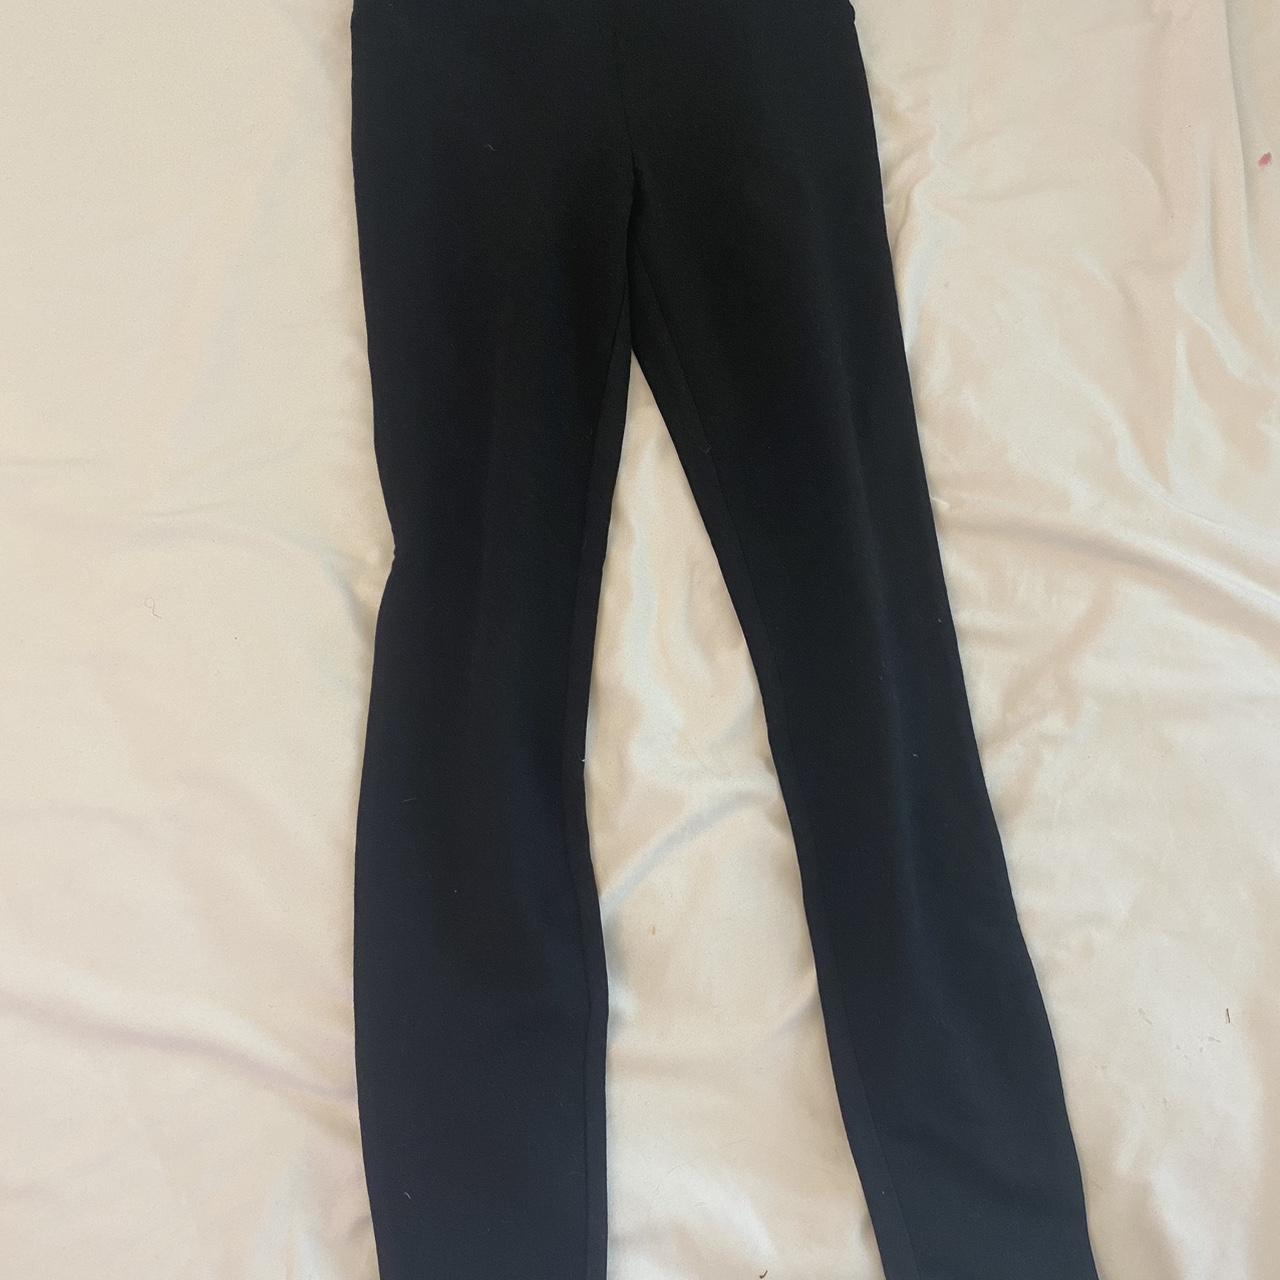 Max & Mia black leggings. like new condition! - Depop